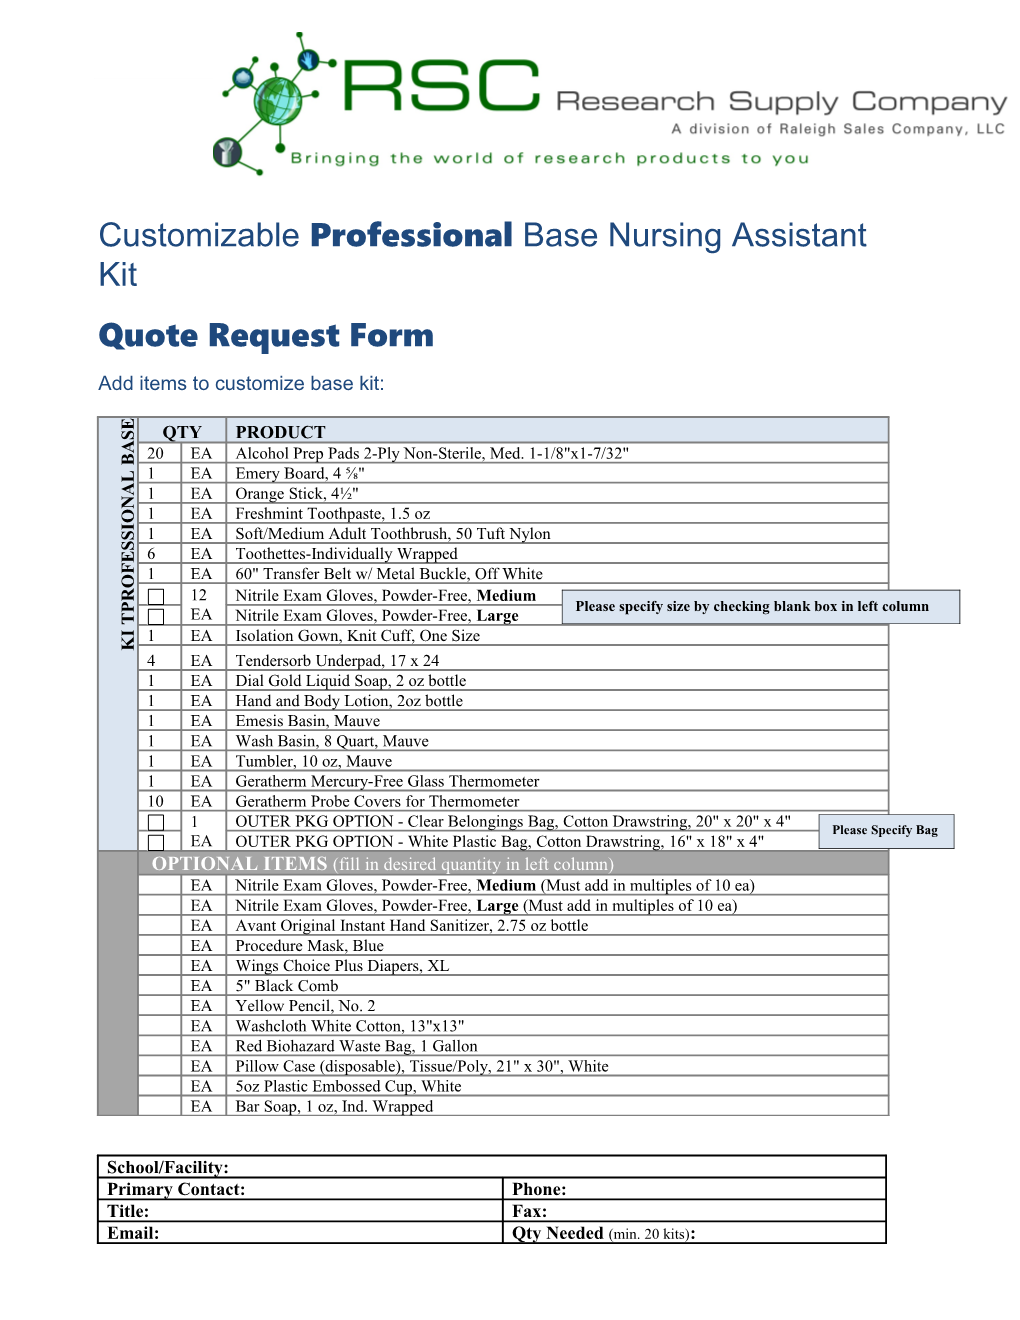 Customizable Professional Base Nursing Assistant Kit